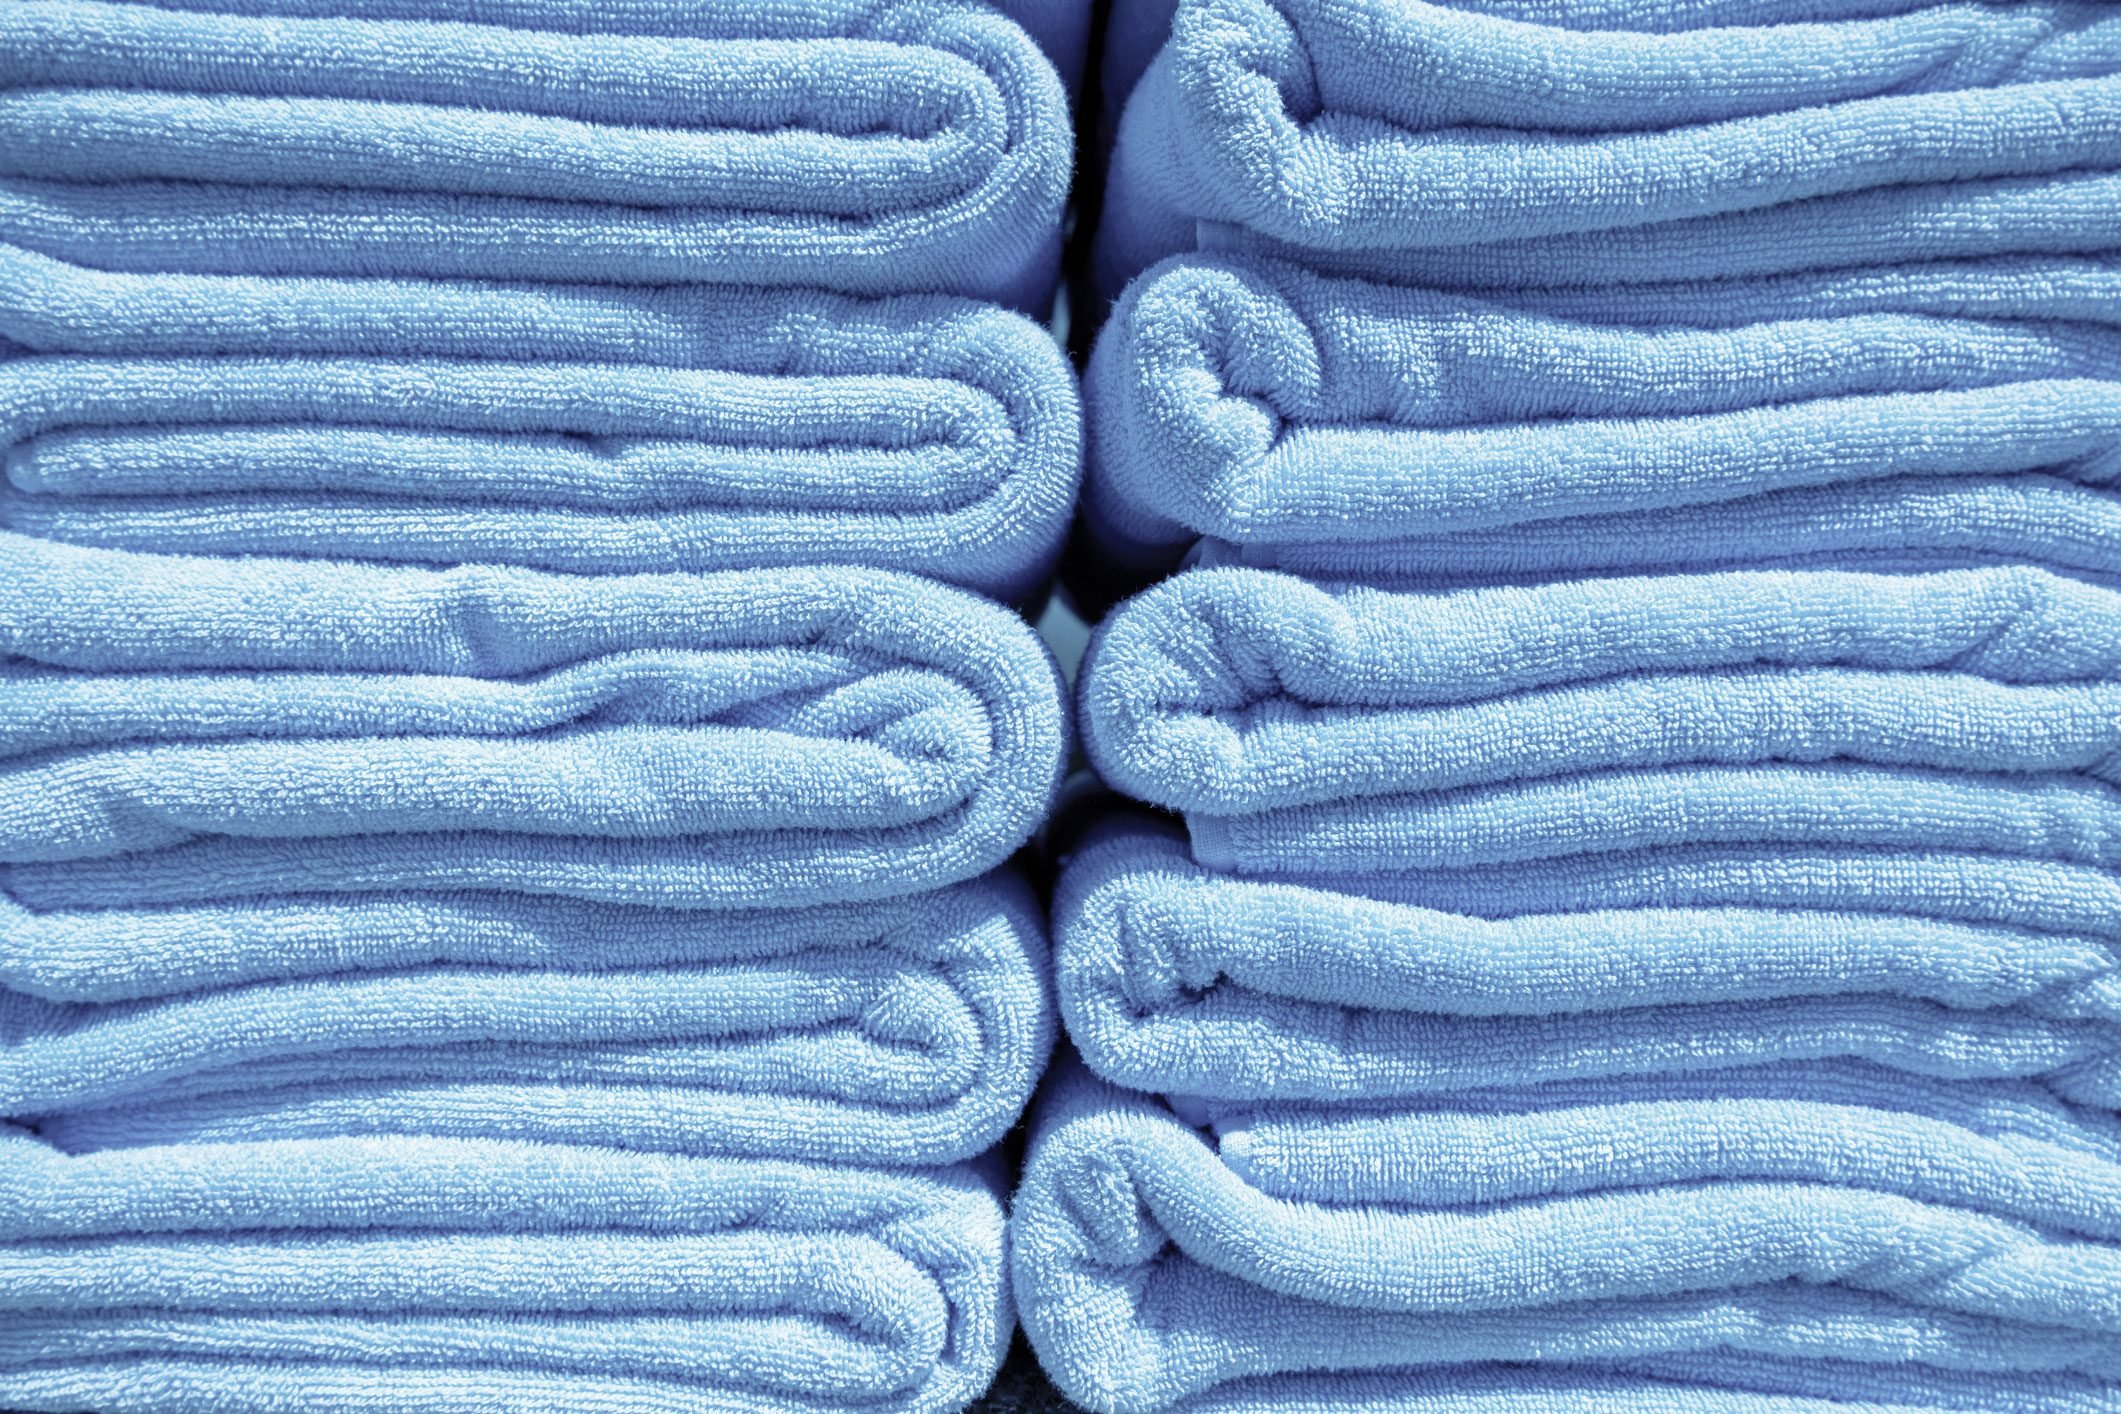 Wash Towels for Longevity